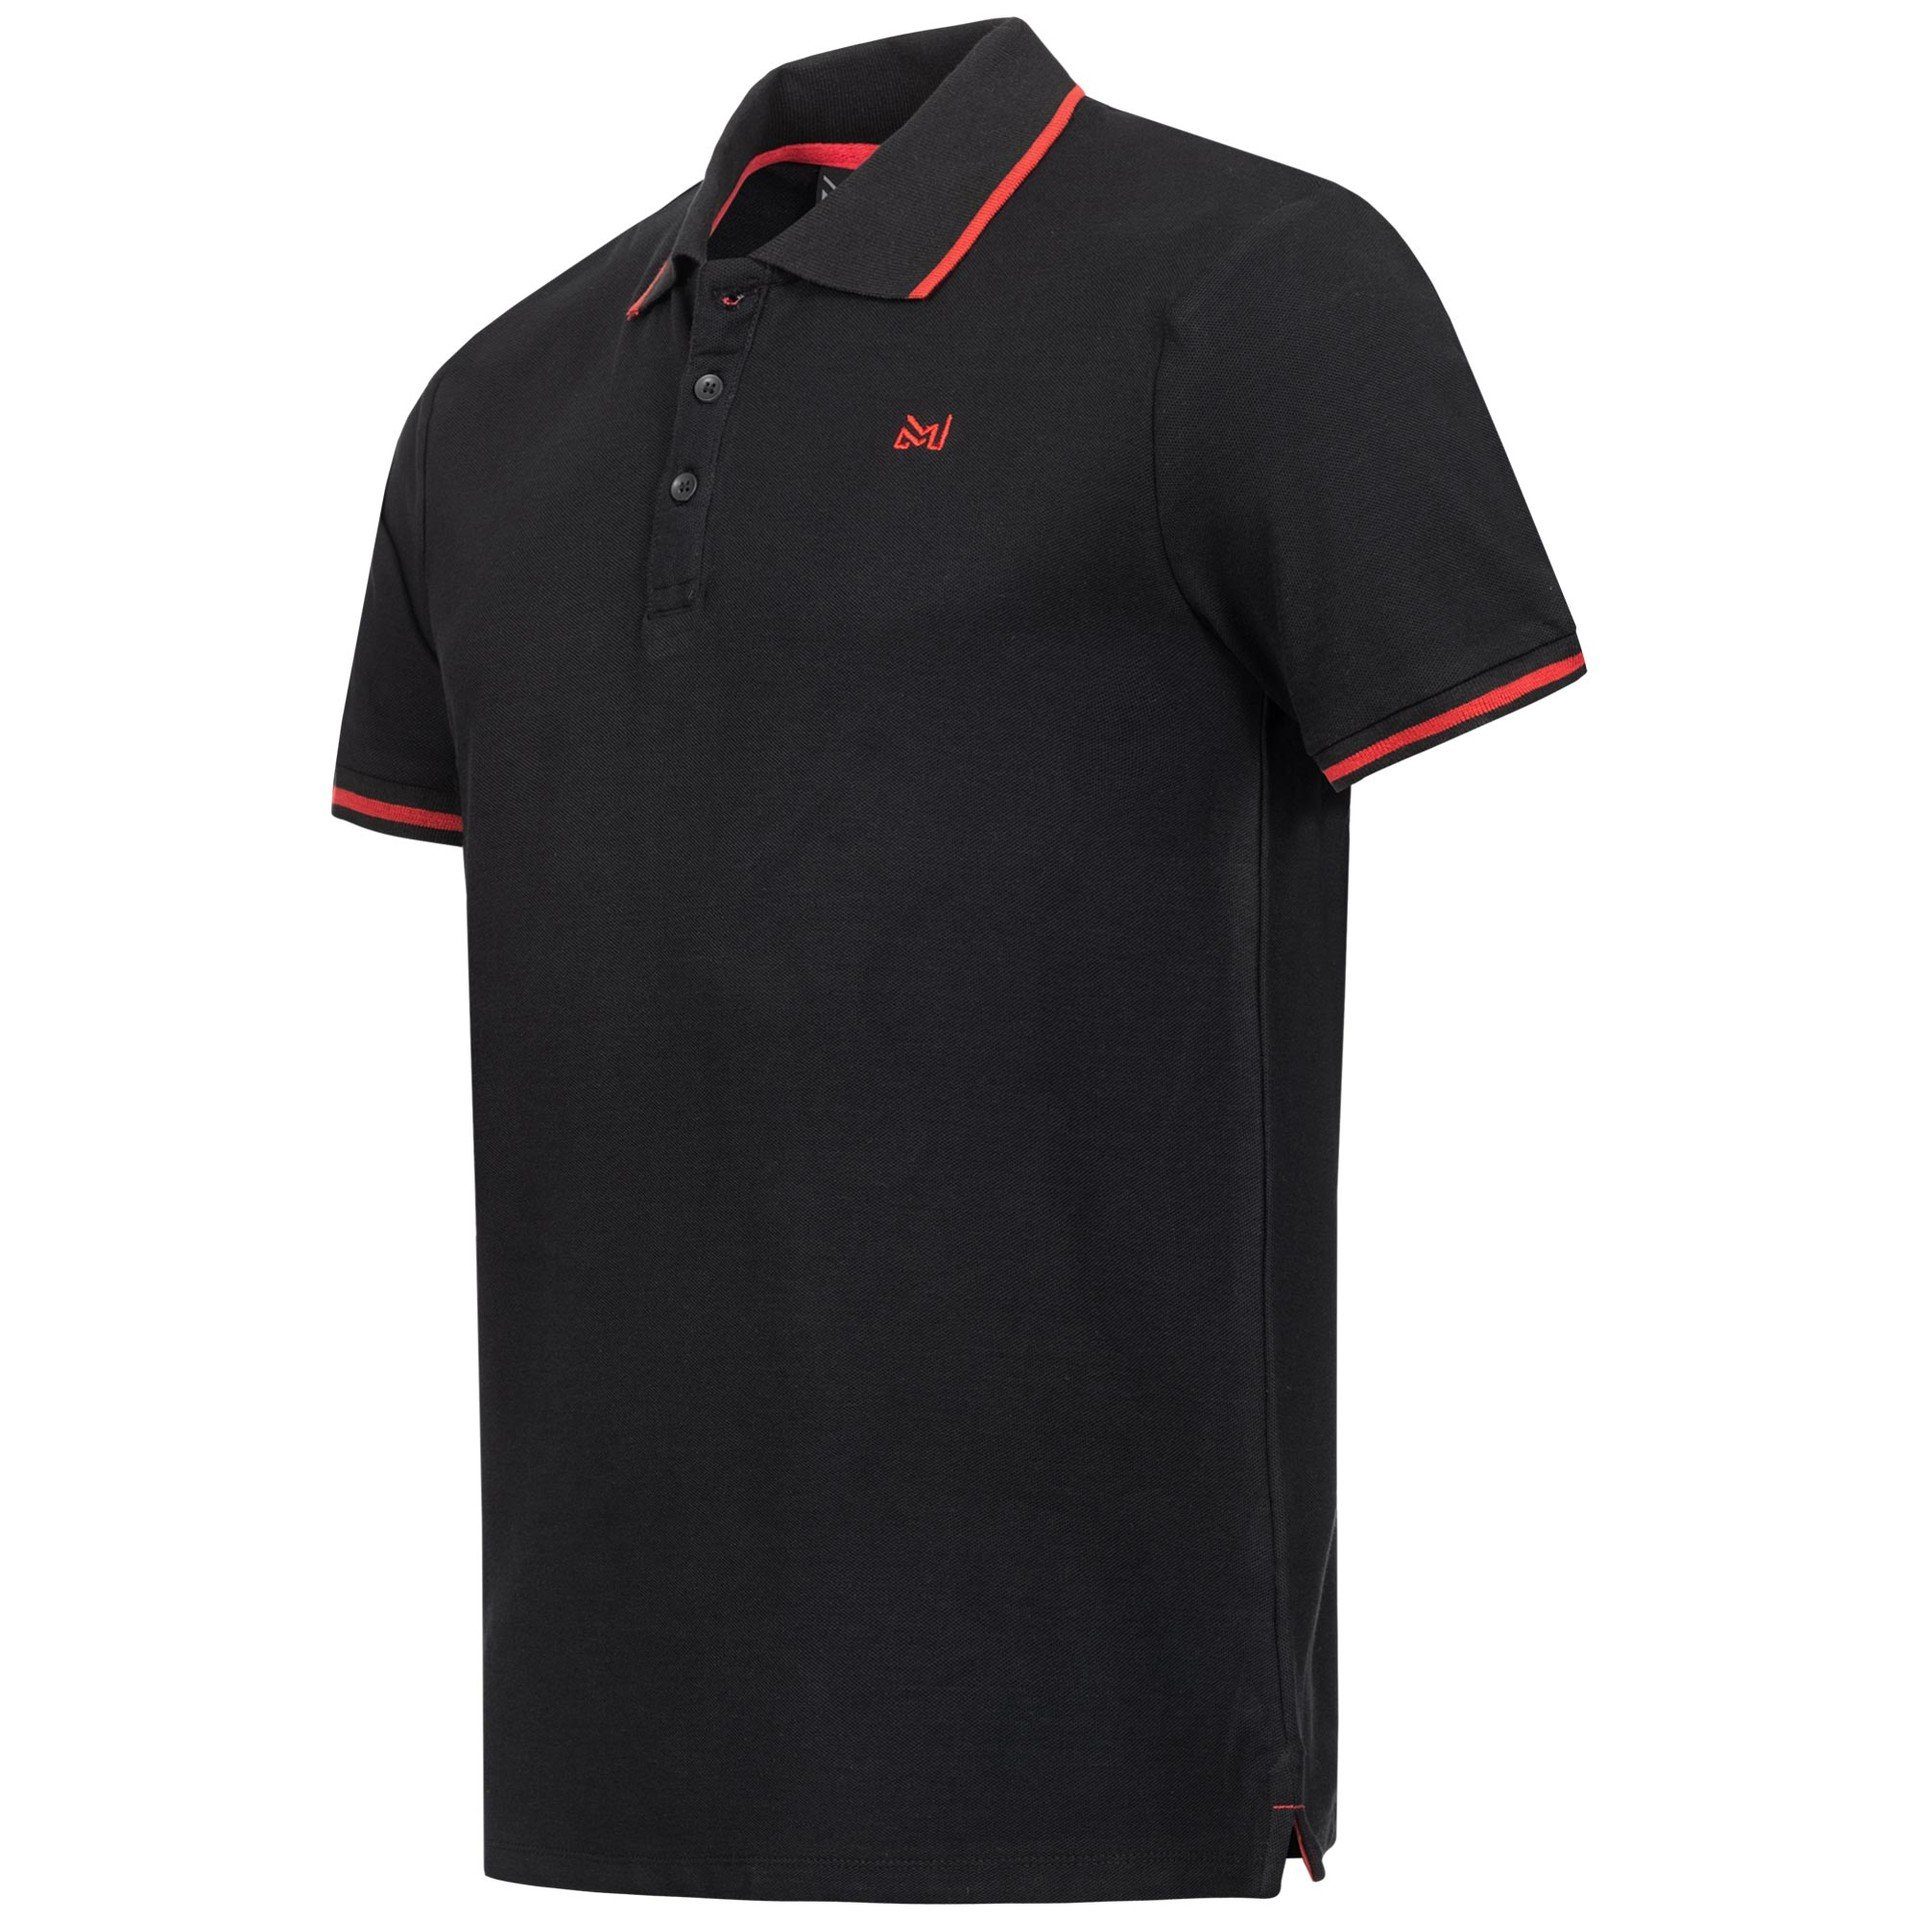 MM-020 Herren Maurelio Modriano Shirt schwarz Poloshirt Polo